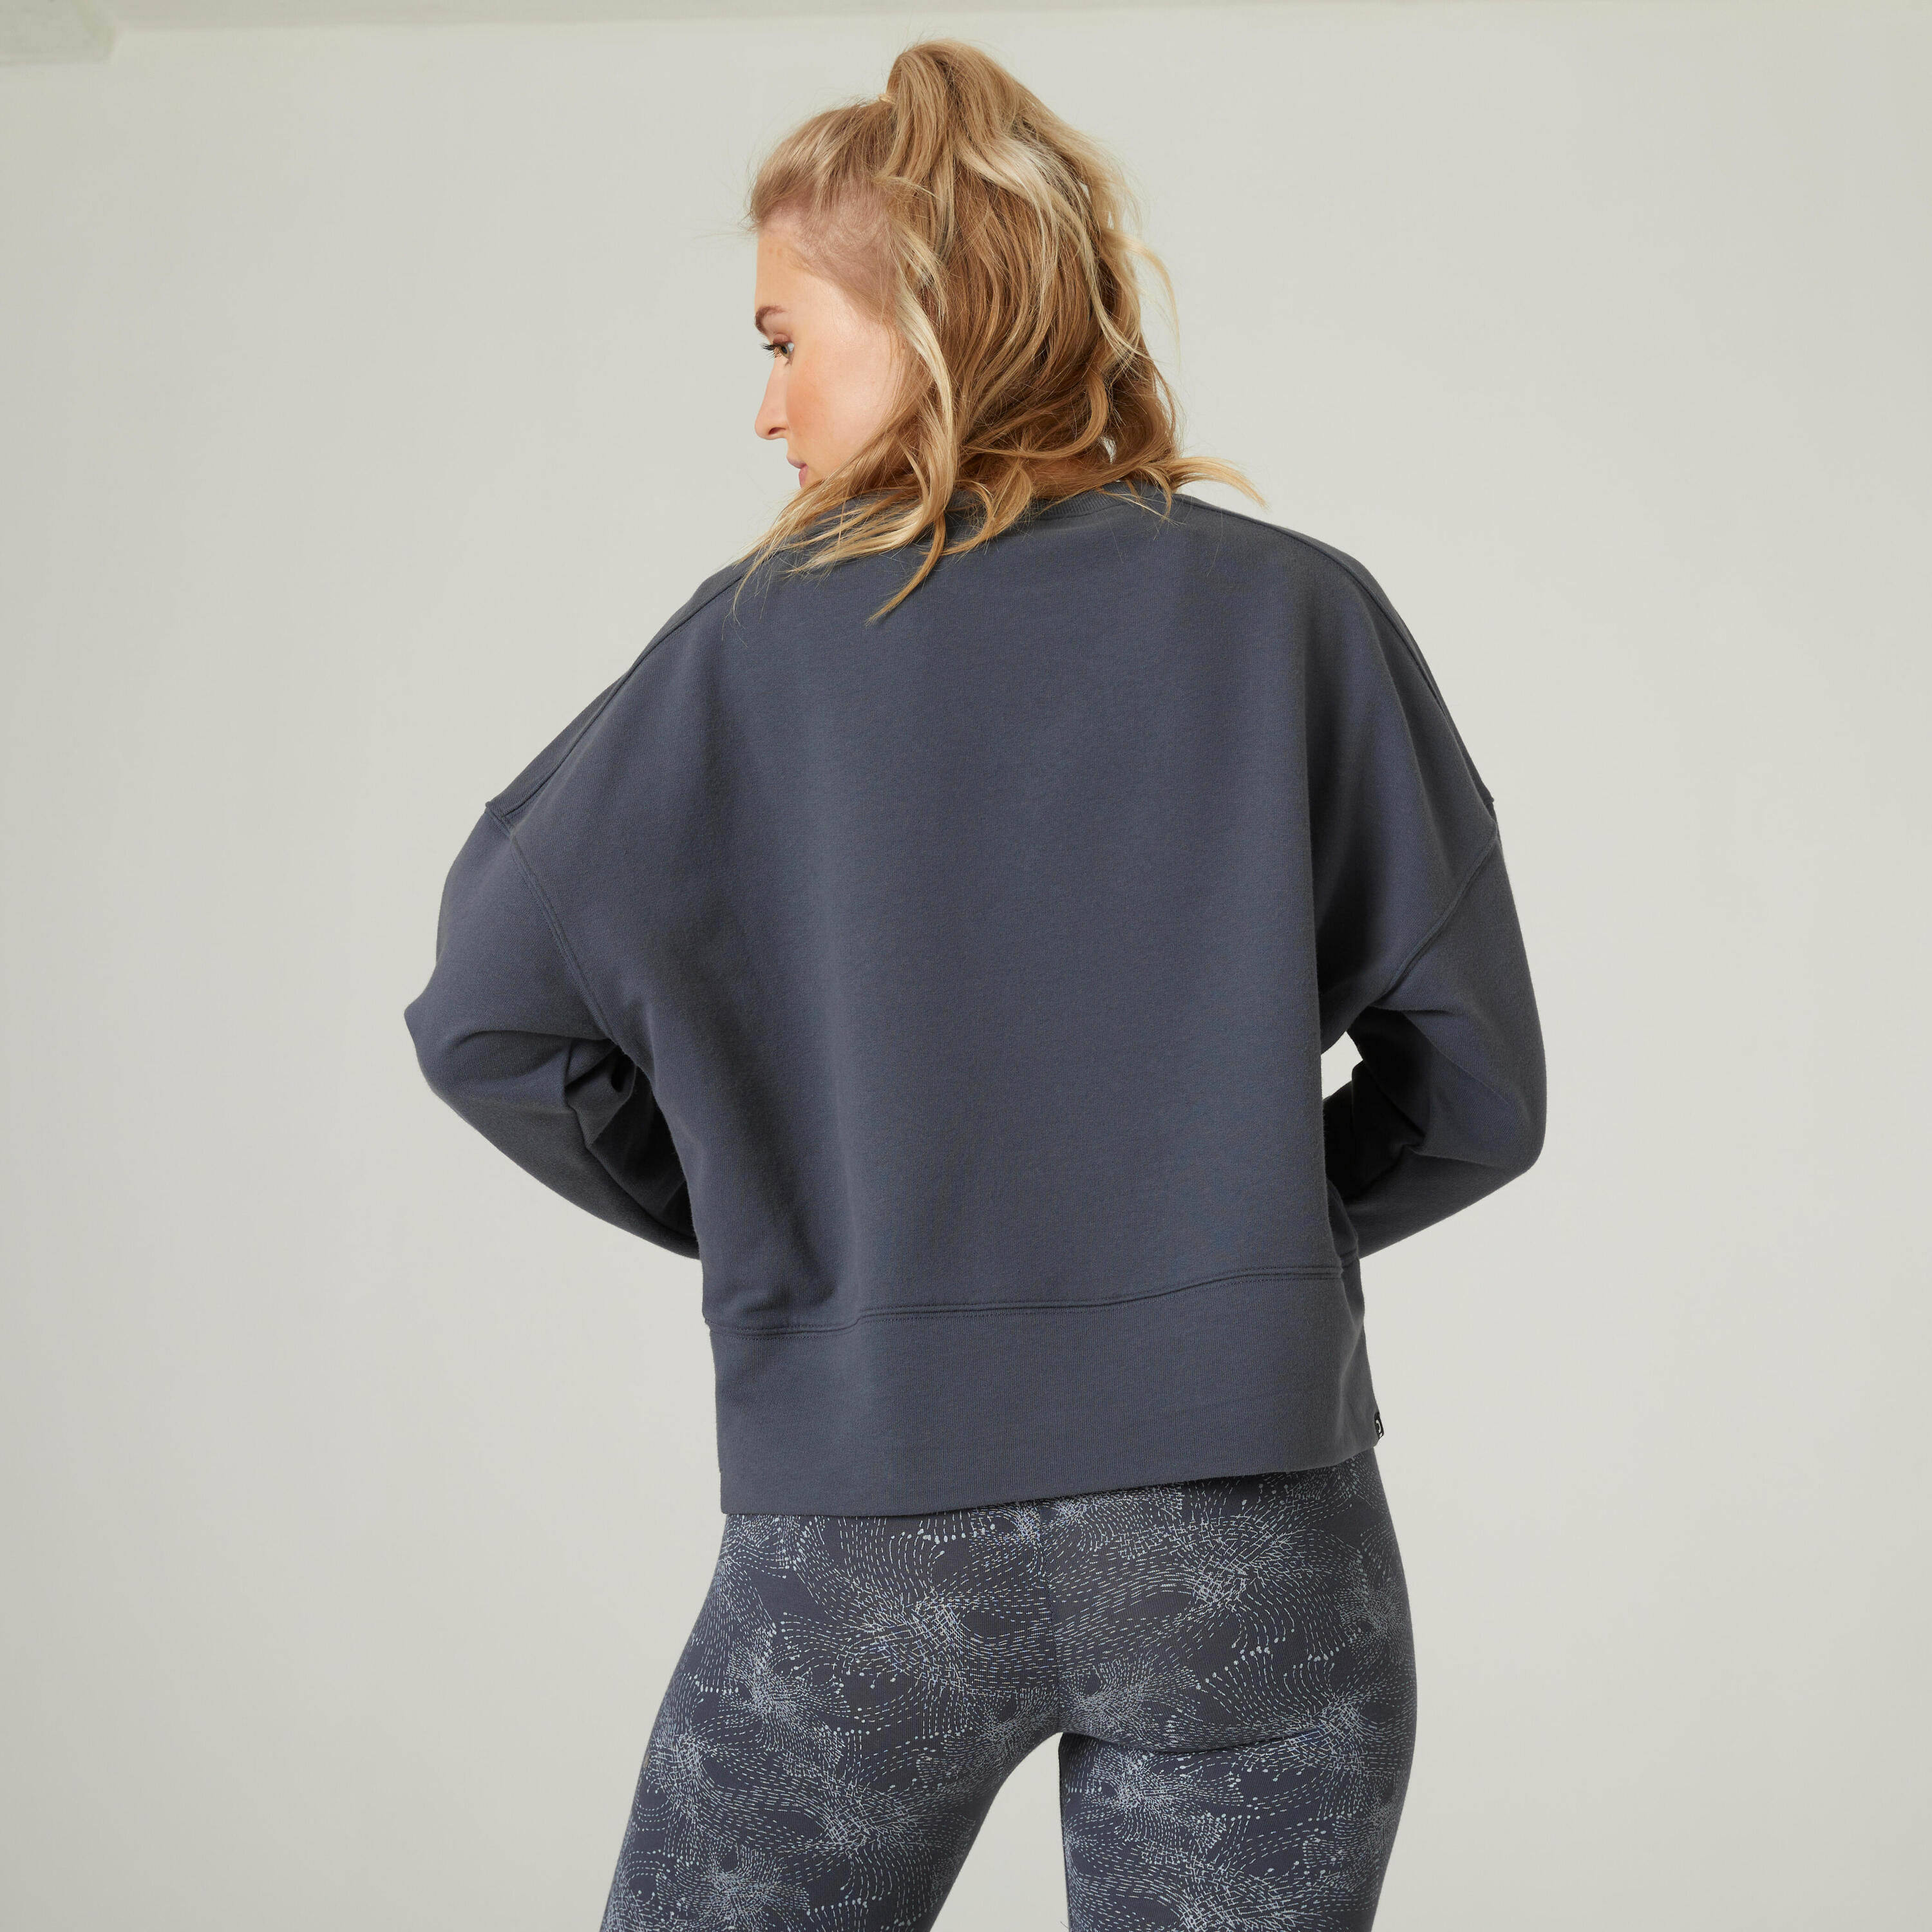 Women's Loose-Fit Fitness Sweatshirt 120 - Grey 2/5